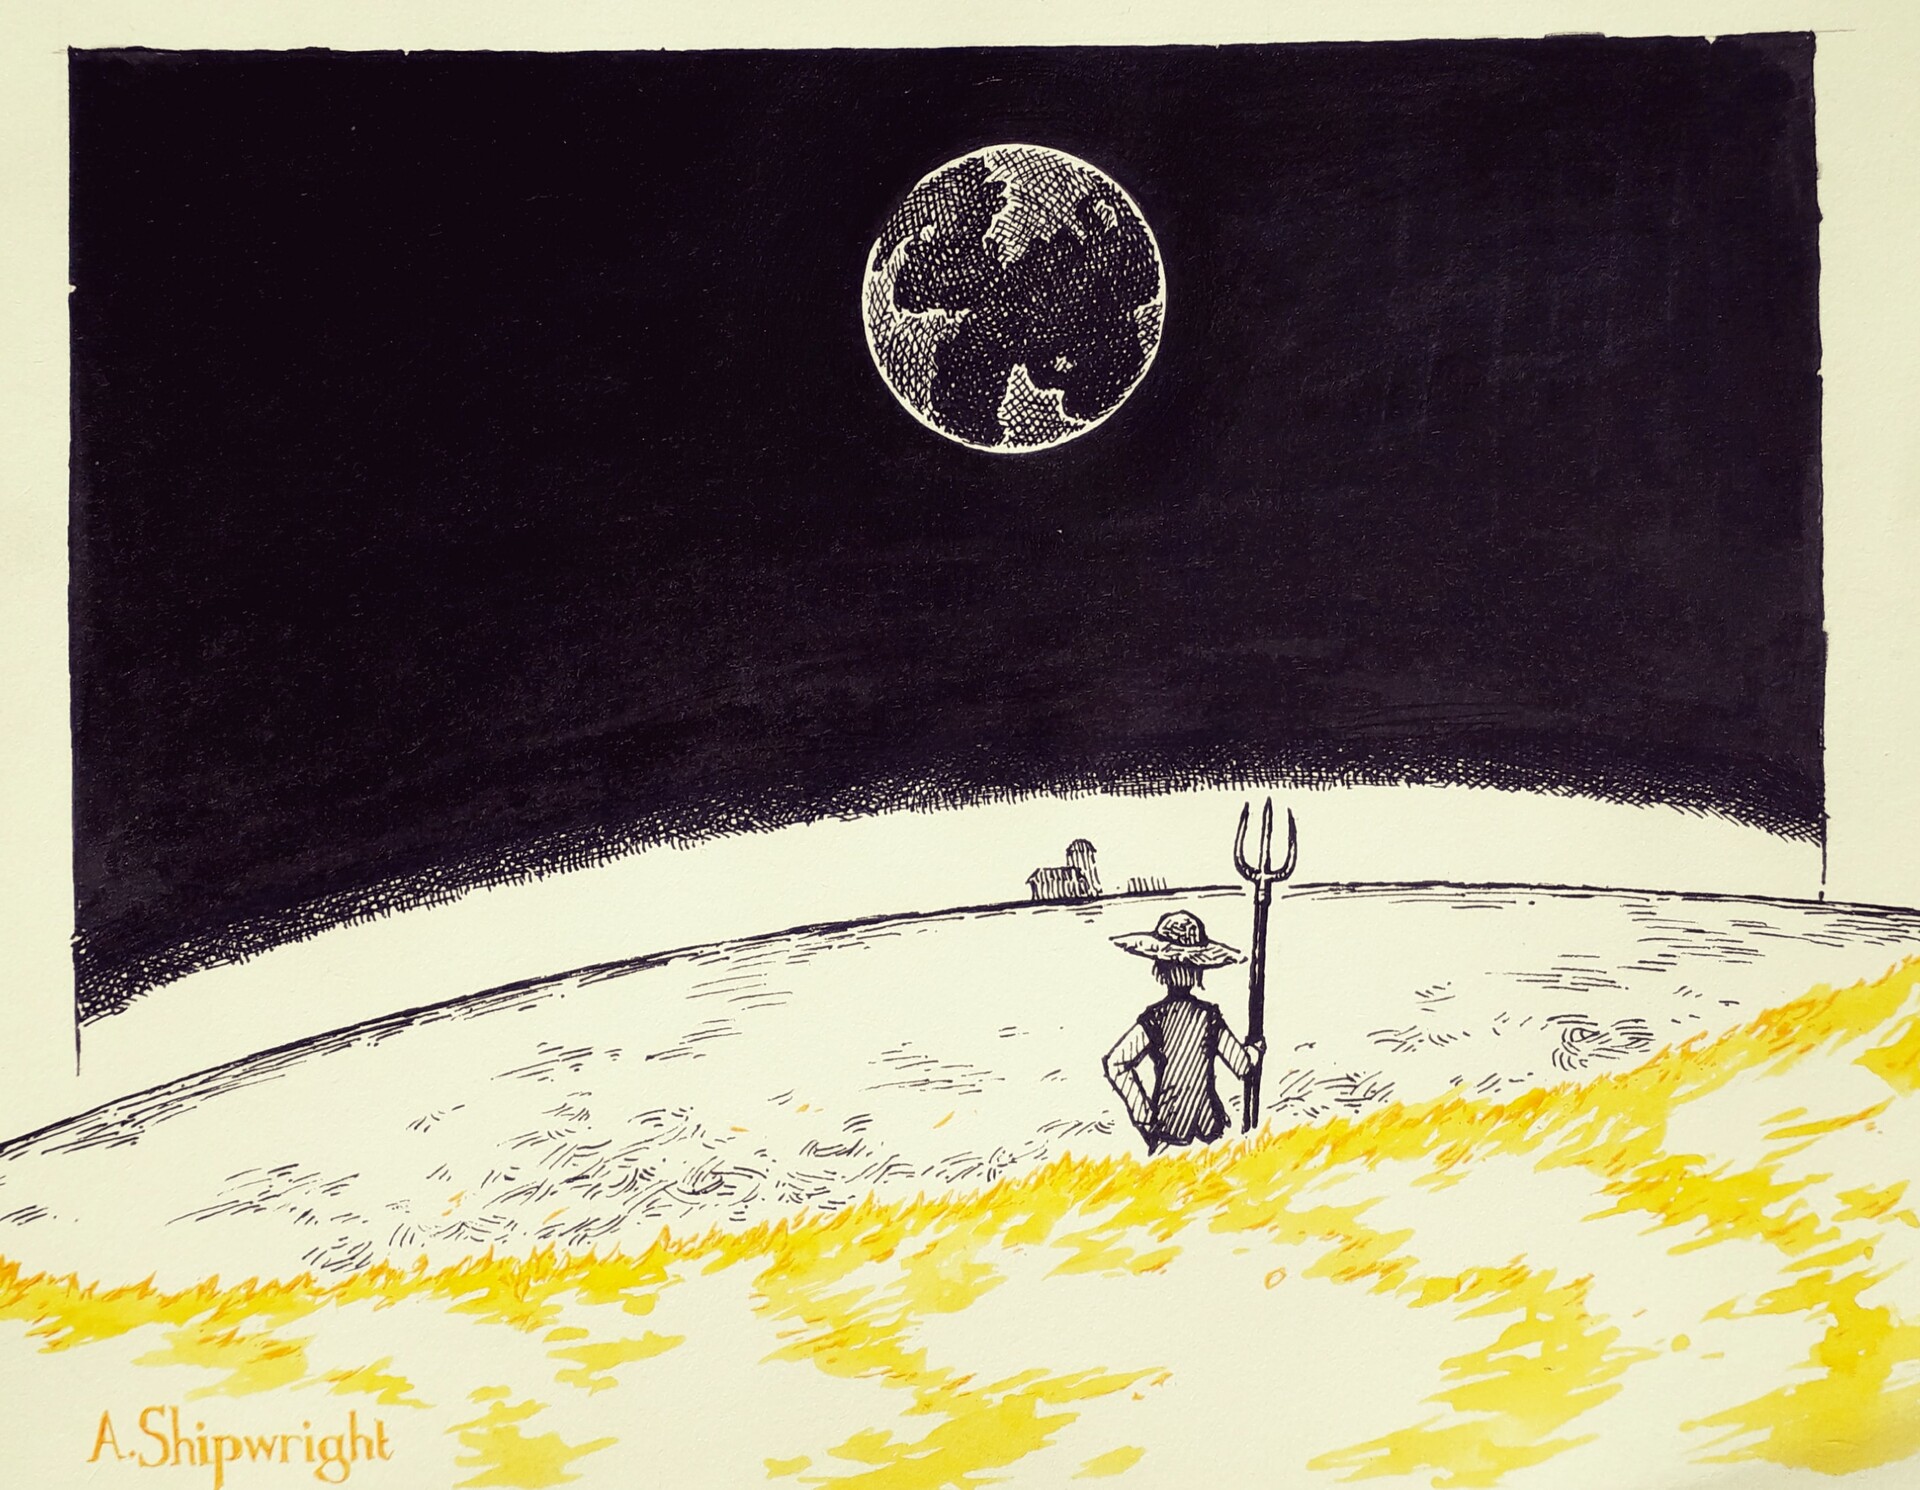 A. Shipwright тема свет. Moon Farm illustration. Почему мун